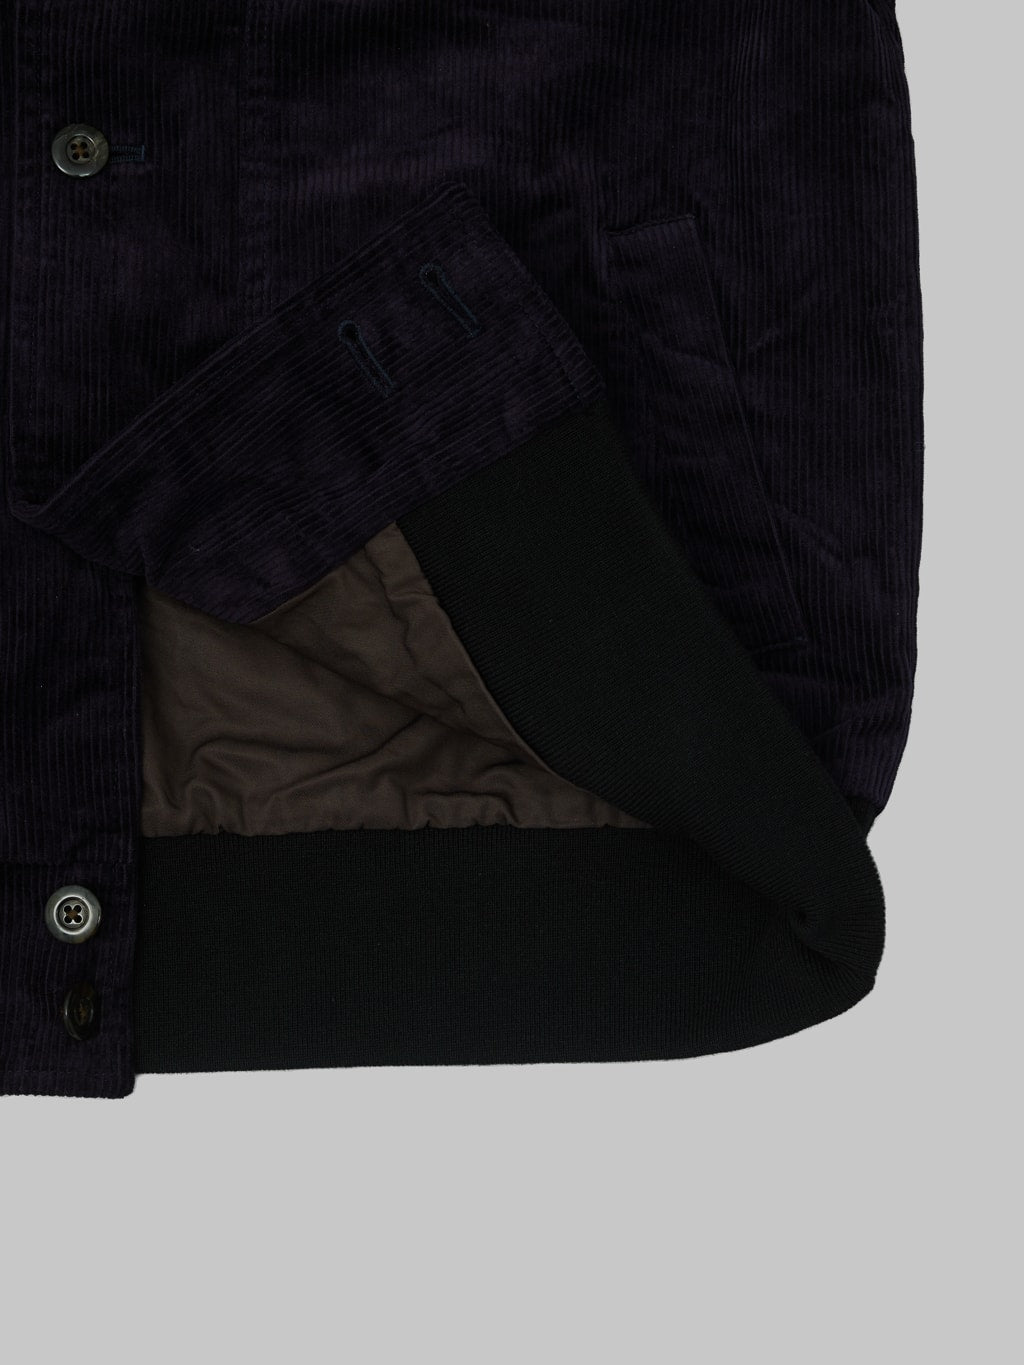 Tanuki Sazanami Corduroy natural indigo dyed Jacket  interior fabric